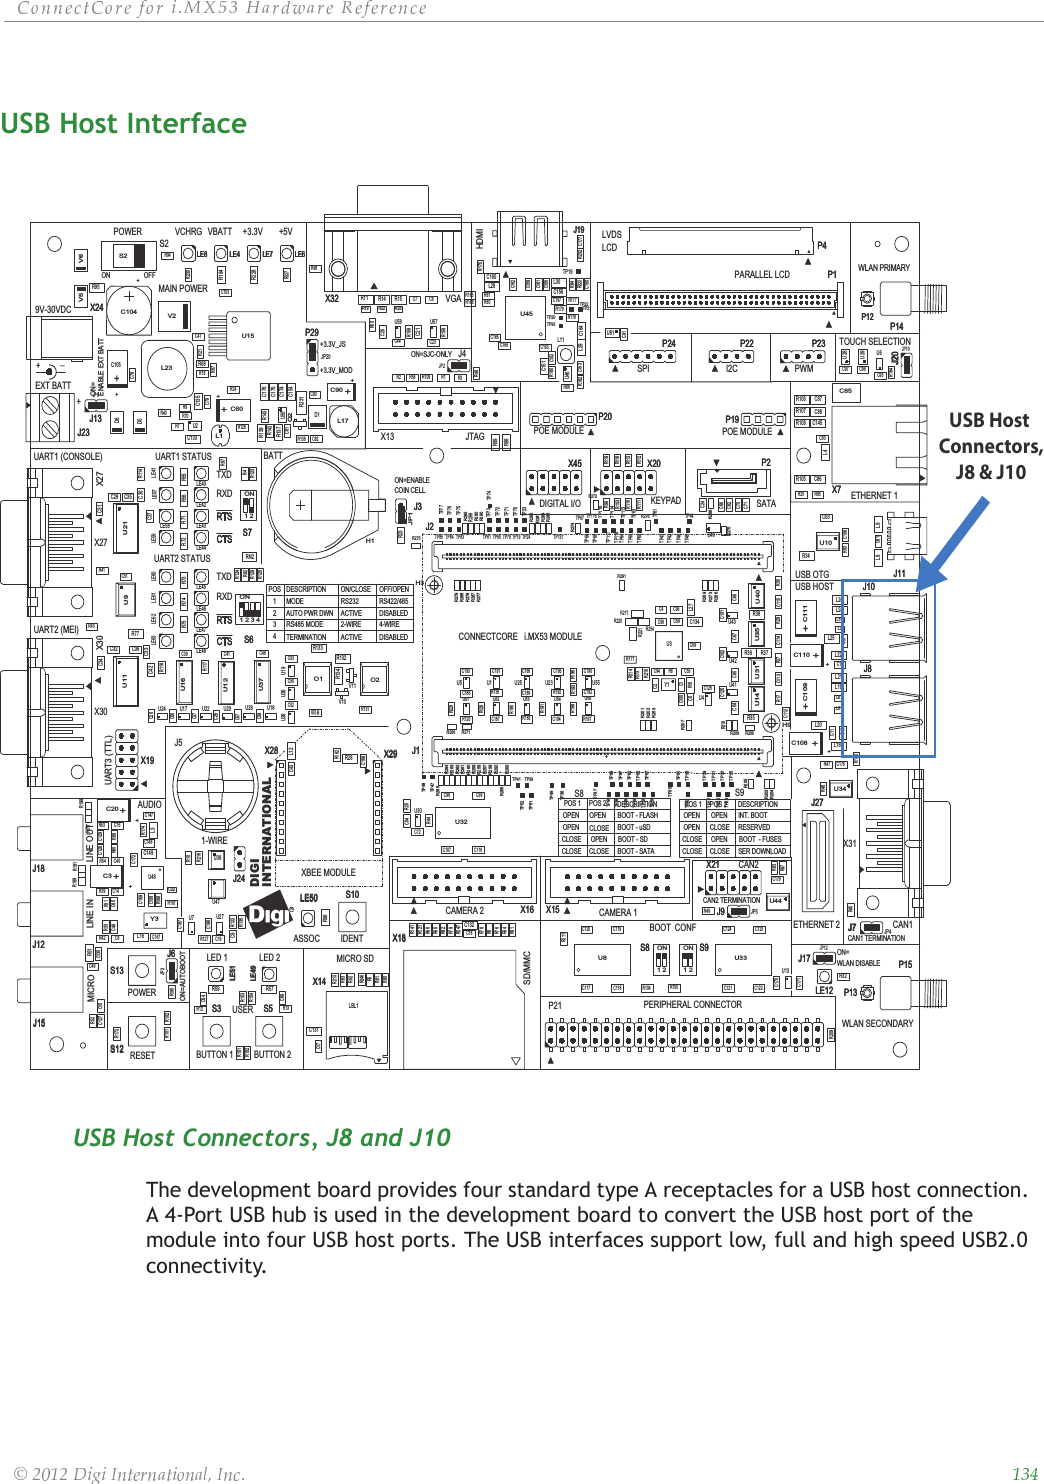 ȱ ȱ ȱ ȱ ȱ ȱȱ ȱ ȱ ȱ ȱȱȱUSB Host InterfaceUSB Host Connectors, J8 and J10The development board provides four standard type A receptacles for a USB host connection. A 4-Port USB hub is used in the development board to convert the USB host port of the module into four USB host ports. The USB interfaces support low, full and high speed USB2.0 connectivity.RU3U50ON41 32S6ON1 2S7ON1 2S8ON1 2S9S5S3S13S10H9H3D1U21U11Q2U8 U33U32X18P24 P22 P23P29X24J1J2P1P21X19X21X45 X20J24J13J17J6J20J7J9U13U52 U53U51 U54U7U55U56U29U28U61U19U24U38U43U42U41U4U20U22U17U36U18U26U6U2U15JP6JP20JP1JP3JP10JP4JP12JP5J19X32X29X28X7P20J11P19R139J27J10J8L8L26L27L21L19L22L20L25L24L18L28L29L9L12L16L3L4D5V5 V6D6P12P13S12V2X30X27X31X14X16 X15X13U46U10U35U31U14 U40LE59LE62LE63 LE61 LE41LE57LE60LE58LE7 LE6LE4LE8LE51LE49LE40LE43LE42LE44LE47LE48LE45LE46LE12LE50J23P14P15J15J12J18V10V11O1 O2R130R131R51R133R134R28R228R56R71R75R77R74 R55R73R59R72R57R194R96R70R18R132R14R106R108R107R105R15R11+C60+R52R84R41C2C1P2R45R49+C3+R187R189R138R159R188R5R6R7C88C87C145C86R16R42R31R39R33RN2C85R127R8R9R36 R37R34R38R35R95R89R88U37U12U16U45S2C25P4C104+C49C129R53C127C48 C45R182C7 C6L10L6L7L5R142R86+C109++C108++C110++C111+C105++C90+R20R181R176R12 R13R85R94R195R102R101C81C103C120C169C43C53C39C27C159C161C106C46C28C162C57C155R222C163C113 C114 C115C126C101C125 C102C69C100C95C94C59C51C56C41C26C18C50C38C83C55C58C44C89C171C78C166C165C177C84C170C52C196C118C17C123C187C98C167C117C119C79C121C188C191C179R50C99C194C97C122C189C195C158C193C186C124C96C197C80C91C93C178R199C148C147C116C107C190C192C168C112R30R17R93R27 R29R135R122R10U9+C20+R246R247C150Y1C153C22L23R143Y3C151C164R23C132C134C160C131C176C175C154C174C135C133C149C70C13C12C47C61C11C71C10C62C66R118R172R4R123R61R62R63R90C23R48R117R64R76R78R141R66R79R121R65R92R91R217R21R221R100R211R110R103R99R113R2R111R126R119R25R184R104R112R1R116R220R254R154R153C157C54R137L17J5U48U47U39U34U44U25U1 U23U27U5R231R204R205R218R208R289R275R274R278R287R273R261R269R206R253R202R281R203R285R290R277R284R266R257R280R282R258R259R260R276R268R22 R26R19R286R283R201R262R263C128R256R265R264R207R271R158R288R272R279R291R177R213R175R179R43R178R140R209R180R232R44R47R98R58R83R24R46R270R40R174R87R109R114R3R97R129R82R124R125R152R68R151R191R227R32R193R190R196R136R230R183R192R128R120R198R229R197R162C82C37C35C15C65 C67 C68C36C4C5C42C29C32C34C33C64C31C156C9C63C19C30C8C14C172R81R80R186R185R67R216C152C130L11L1U57LBL1J4R173R214C24JP2R292C16R69R60L30R215R171U49C21U30J3C72H1R255R293U58R54 C40TP83TP85TP61TP90TP114TP67TP66TP115TP69TP116TP71TP117TP74TP78TP80TP63TP118TP64TP22TP21TP20TP19TP46TP72TP45TP60TP43TP84TP42TP79TP65TP73TP113TP137TP70TP23TP24TP81TP47TP48TP77TP76TP75TP93TP38TP49TP52TP51TP39TP41TP25TP82TP89TP87TP62TP29TP30TP31TP28TP91TP33TP35TP57TP26TP37TP88TP86TP68TP58TP36TP92TP27TP44X14J17 P15S8CAN2SATAPWMON=WLAN DISABLEJ19J12POWERX27ON=P29S9S9S5_I2CX21CLOSERXDJ1+3.3V_JSSER DOWNLOADJ18+3.3V_MODDIGIJTAGS8IDENTDISABLEDUSERP22+LINE OUTUART3 (TTL)AUTO PWR DWNJ13+VCHRGON/CLOSEP4RESERVEDCAN1 TERMINATIONTXDCLOSEUART1 STATUSX30OPENP12UART2 (MEI)LE51ETHERNET 1SD/MMCOPENX209V-30VDCSPI3LE49X15RS485 MODE+5VDESCRIPTIONVBATTJ81DISABLEDJ10MAIN POWEROPENP24J11LE8BOOT - SATAACTIVEPOS 1OPEN4BUTTON 12-WIRES6LVDSLCDOFF/OPEN4-WIREACTIVEX32POSINT. BOOTVGADESCRIPTION2MICRO SDX28WLAN PRIMARYJ27ON=ENABLECOIN CELLX45MICRO1-WIREJ15INTERNATIONALETHERNET 2LE50CAN1WLAN SECONDARYPOS 2J9P1OPENX29J24LED 2LE4X18S13PARALLEL LCDS3S12XBEE MODULEOFFP2J2ON=AUTOBOOTJ20i.MX53 MODULEPOS 1J7CLOSE OPENRXDCLOSEUART2 STATUSBOOT  - FUSESX16RESETTERMINATIONP14LINE INHDMIX19CLOSEASSOCCLOSE CLOSEBOOT - FLASHPOS 2LED 1CAN2 TERMINATIONS7OPENX7BOOT - uSDBOOT - SDJ6BUTTON 2J23P23S2LE6LE7S10KEYPADMODECAMERA 2RS232CONNECTCORERS422/485EXT BATTENABLE EXT BATTX24TOUCH SELECTIONDESCRIPTIONONUART1 (CONSOLE)+3.3VPOWERLE12CLOSEDIGITAL I/OTXDPERIPHERAL CONNECTORCAMERA 1BOOT  CONFUSB OTGUSB HOSTON=SJC-ONLYAUDIOJ3POE MODULEP19POE MODULEBATTOPENP20P13USB Host Connectors,J8 &amp; J10